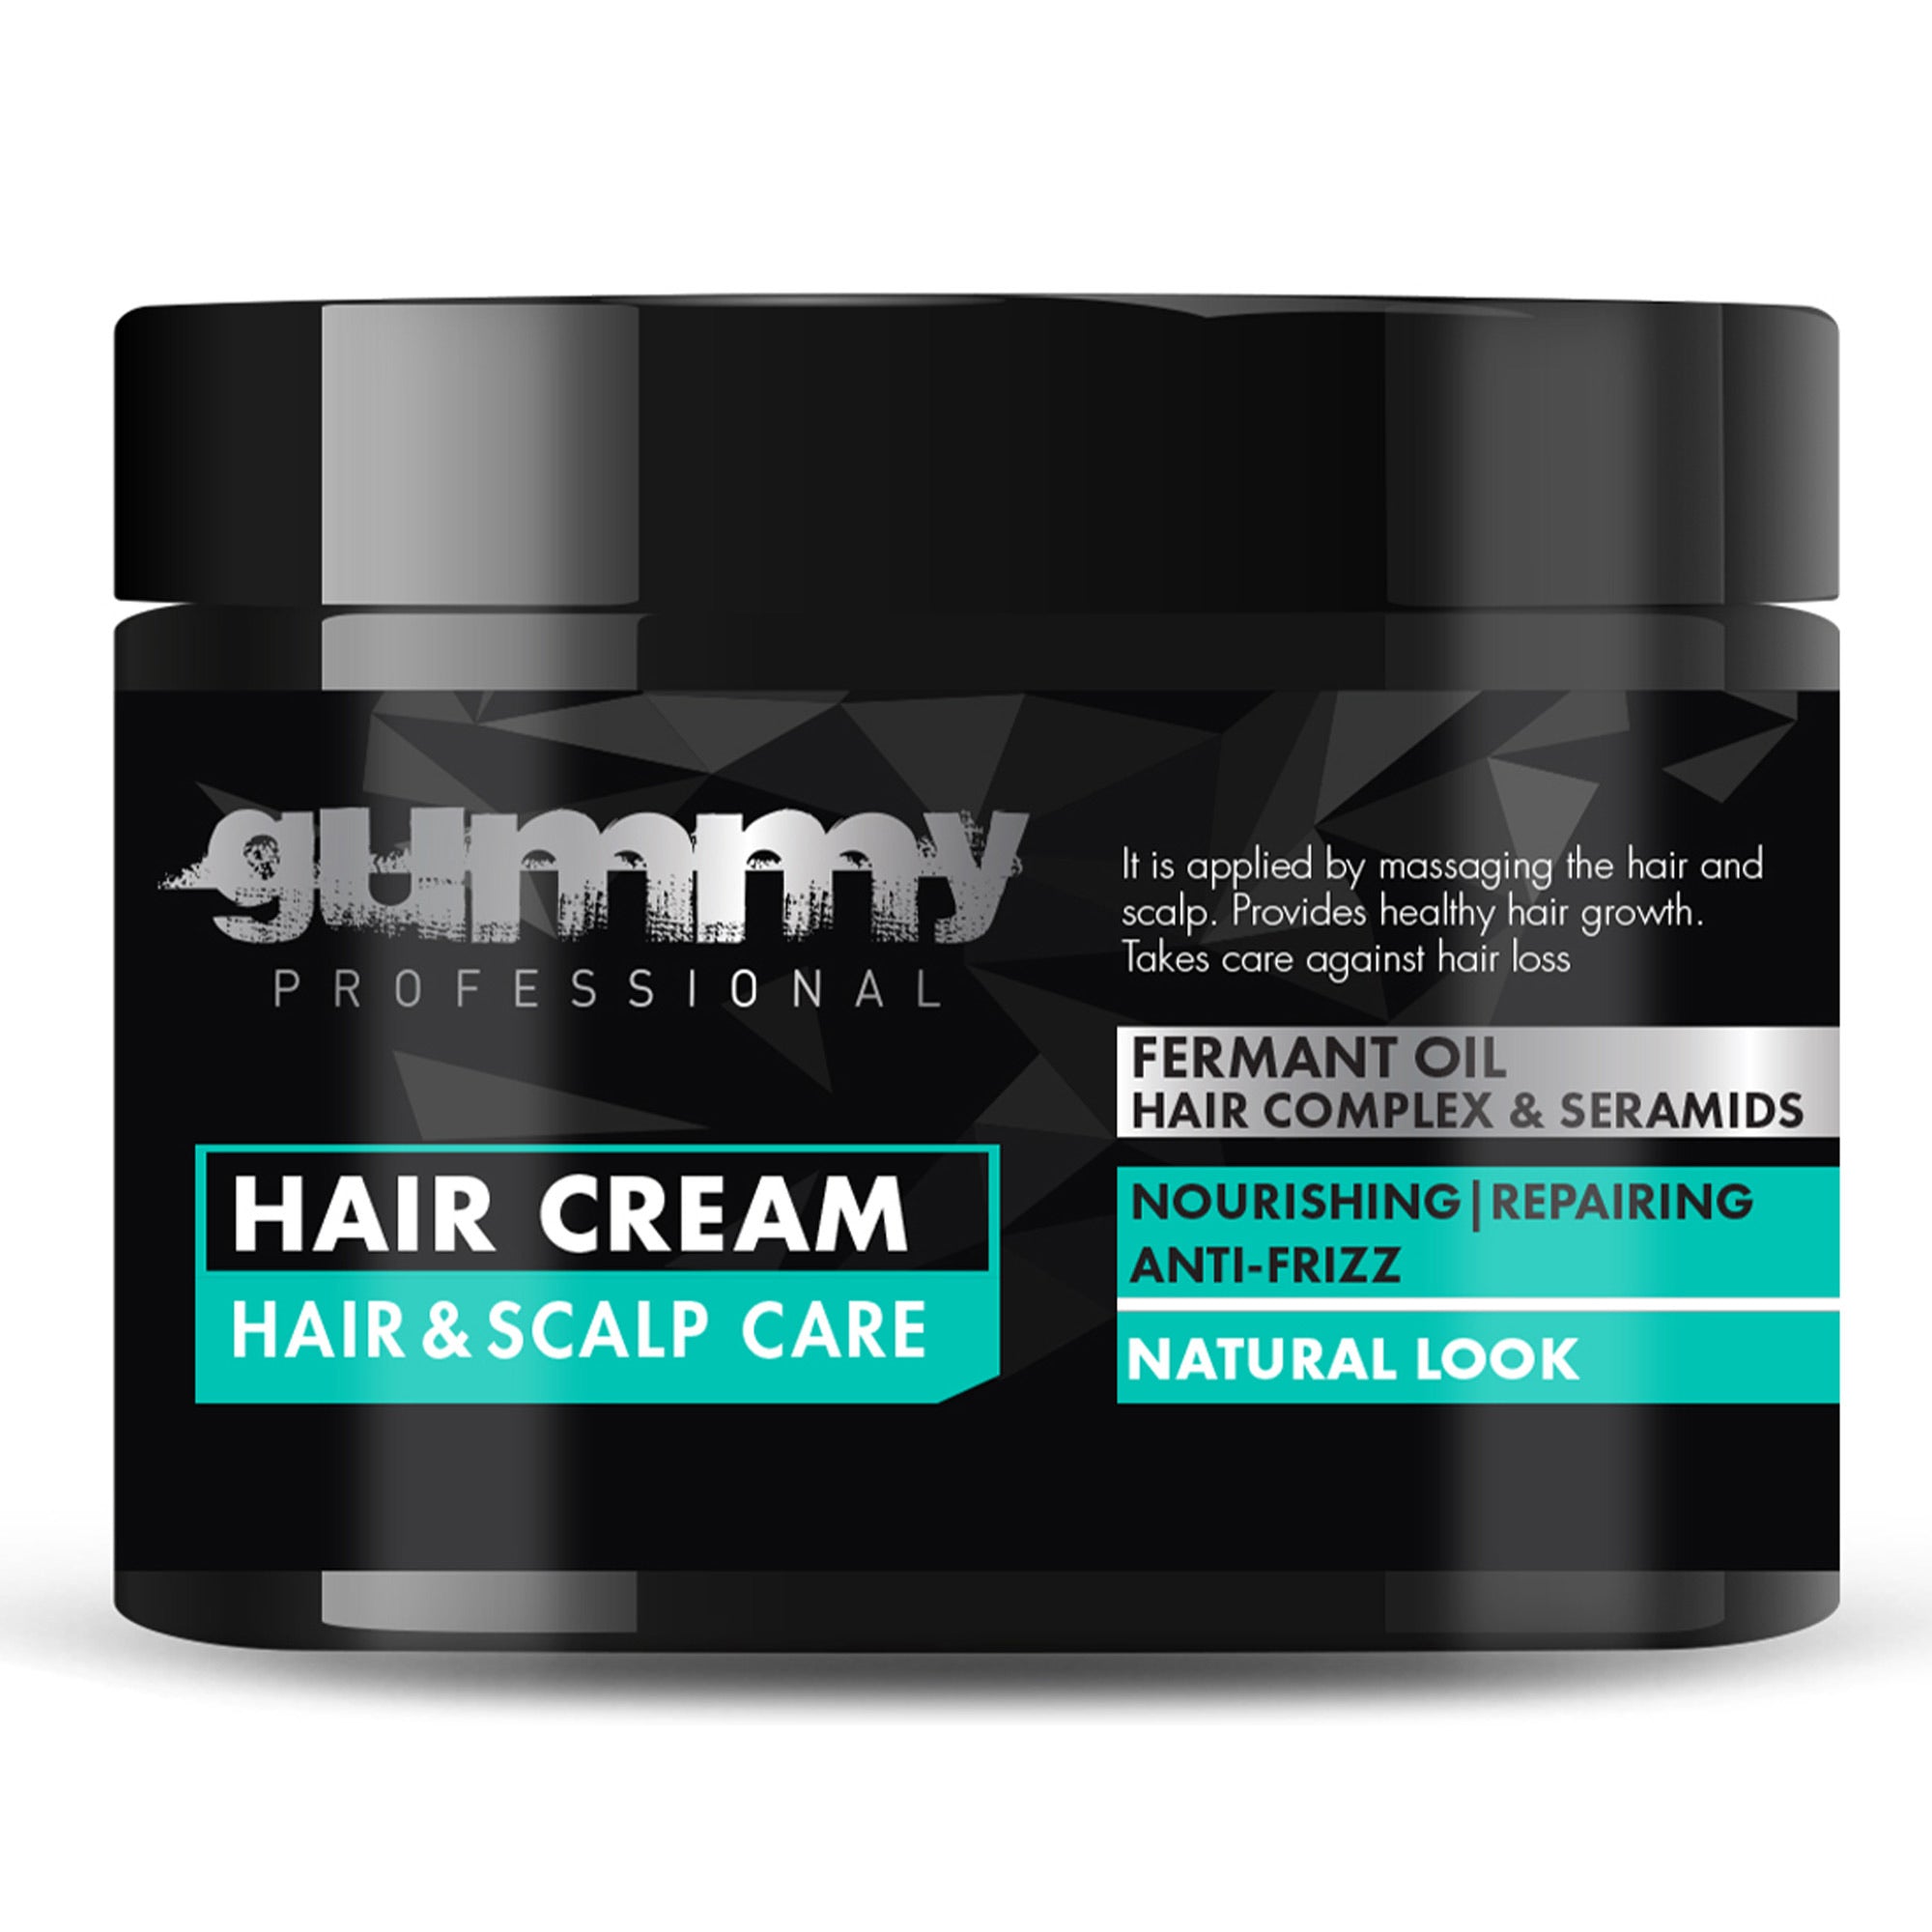 Gummy - Hair Cream for Hair & Scalp Care 200ml